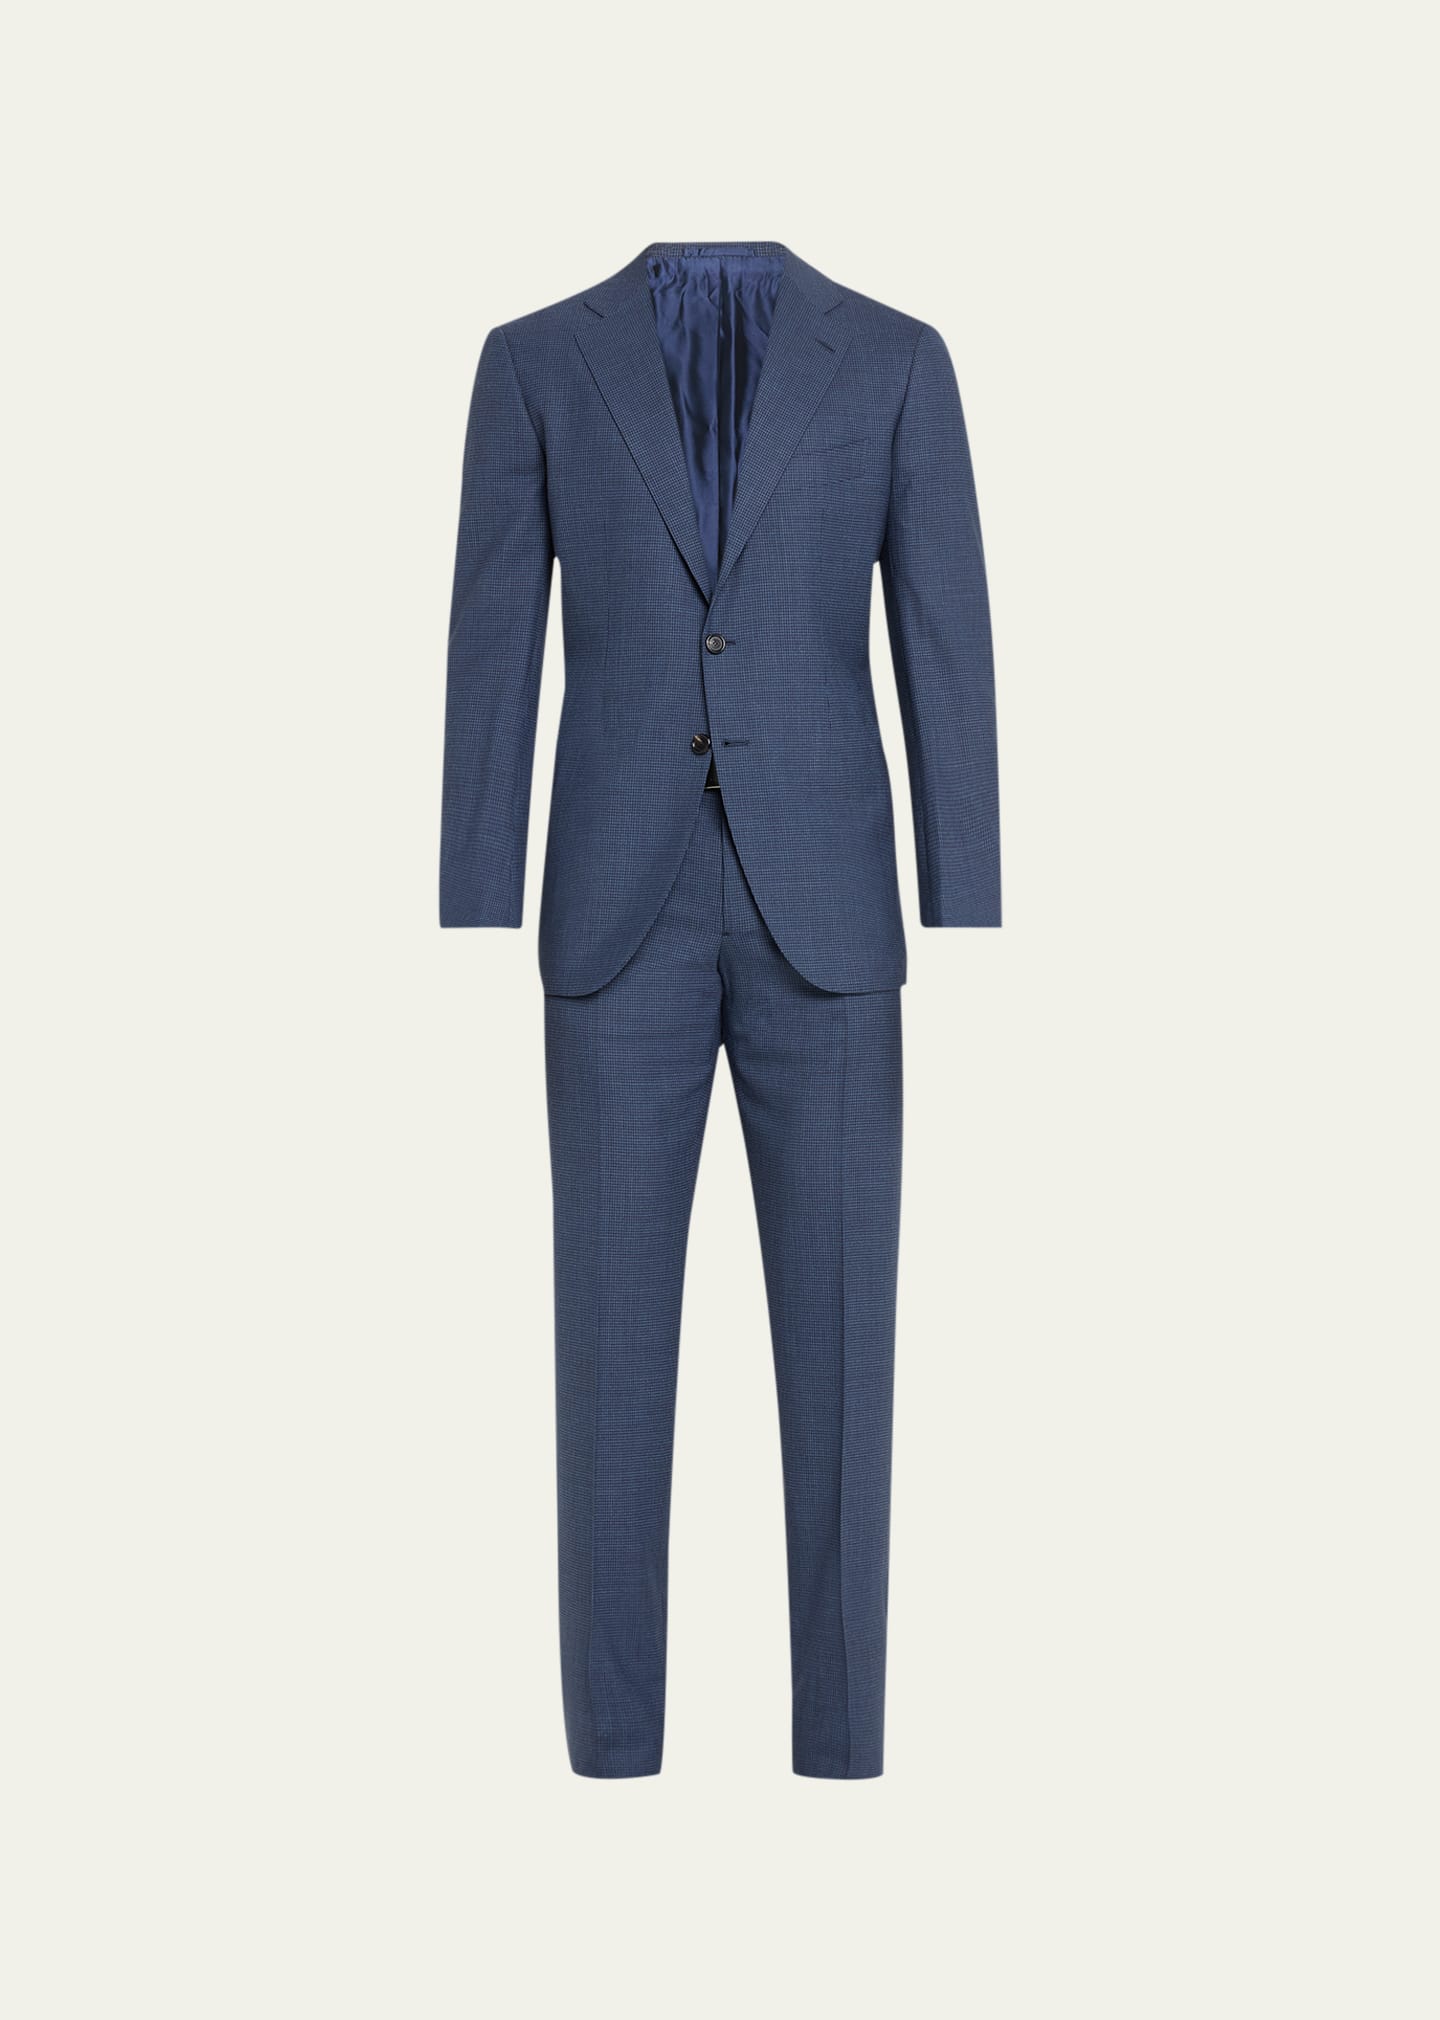 Cesare Attolini Men's Check Wool Suit In B24-blue